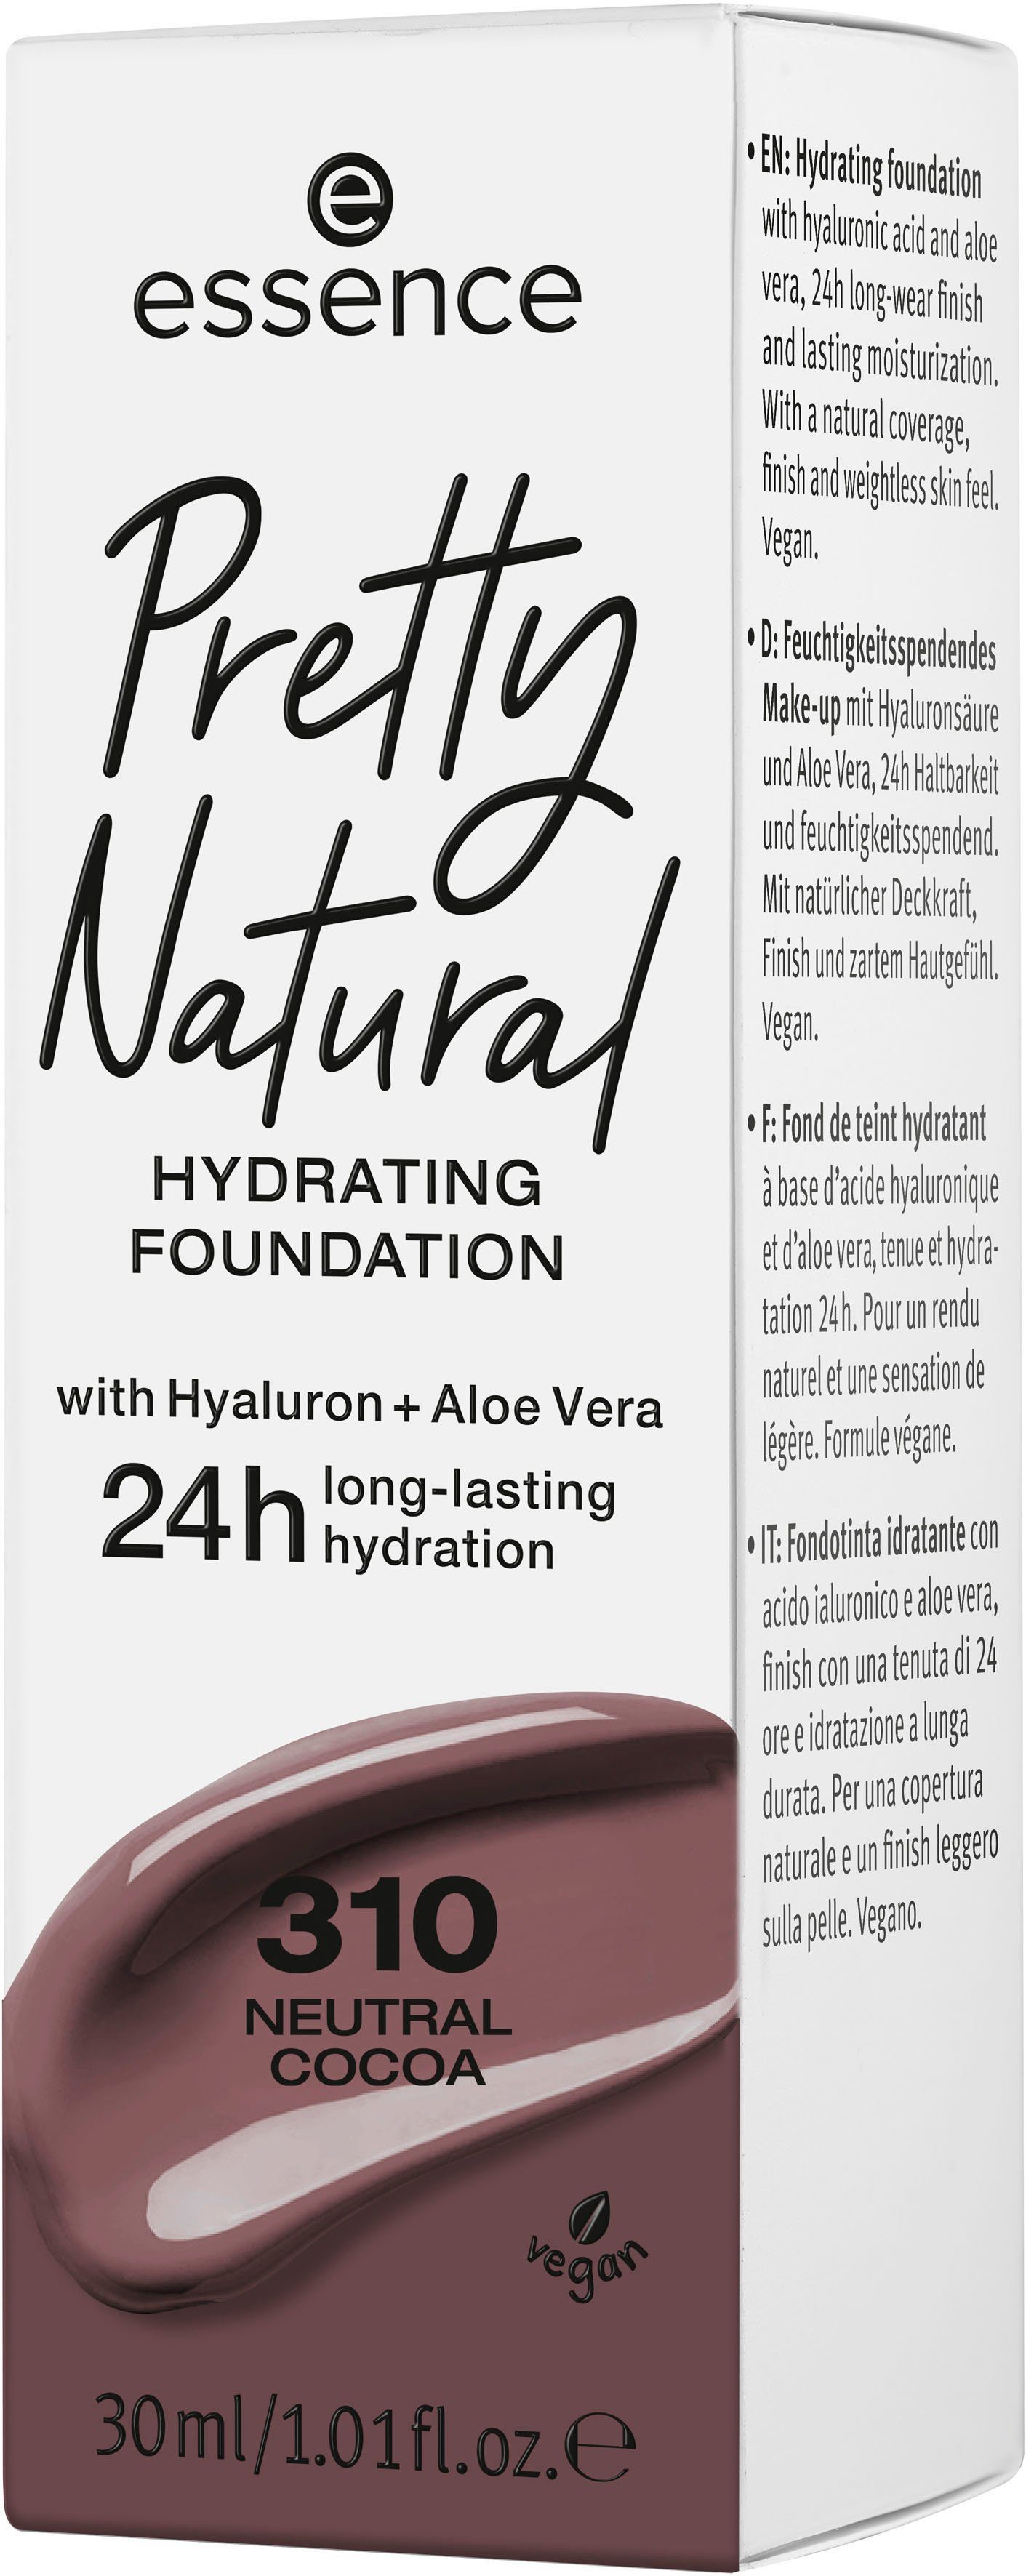 Essence Foundation Pretty Natural Neutral 3-tlg. HYDRATING, Cocoa